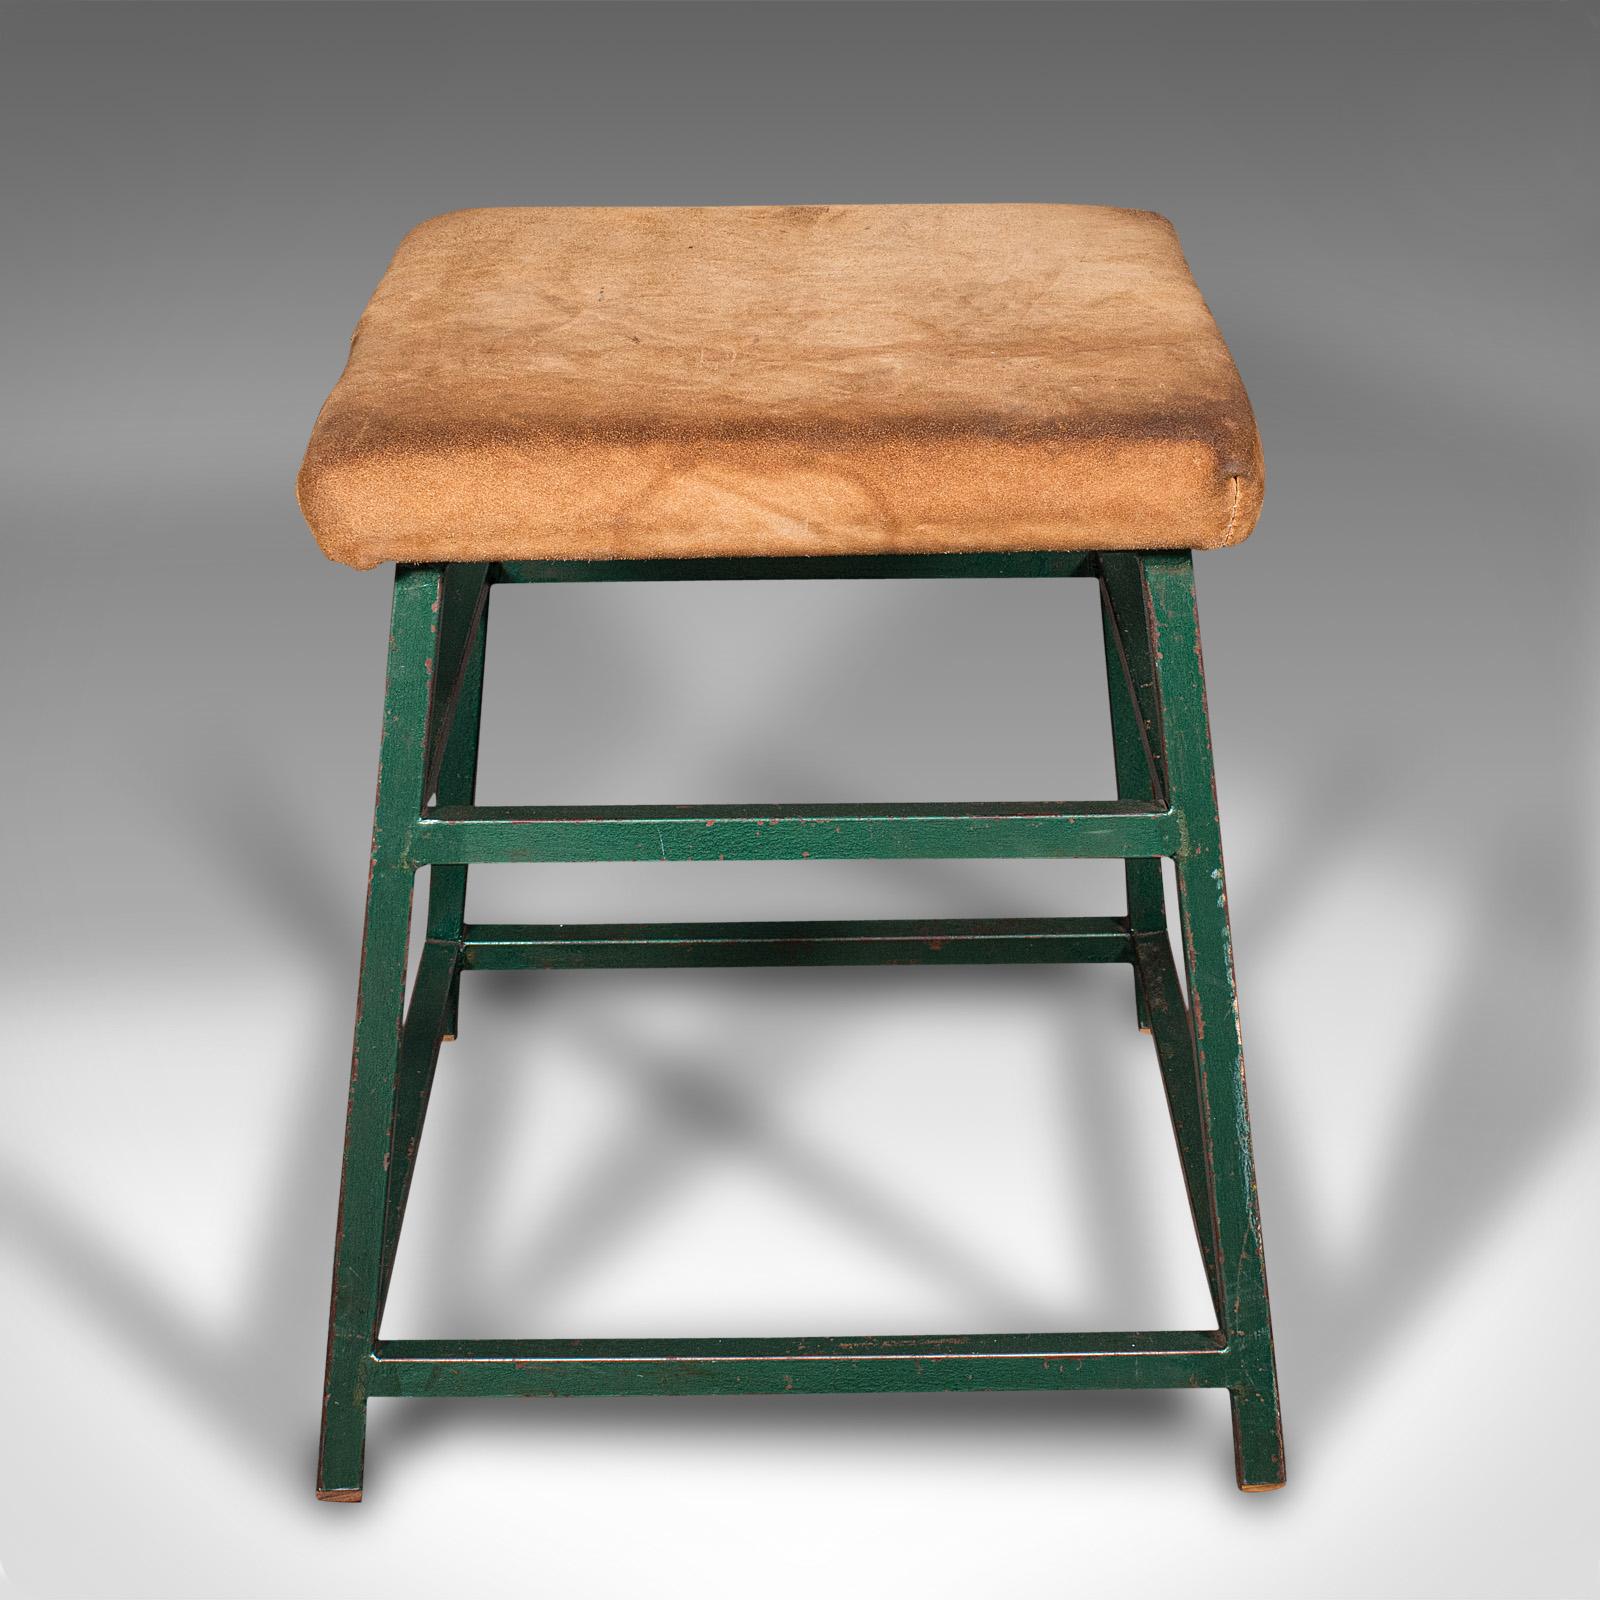 lab stool wooden